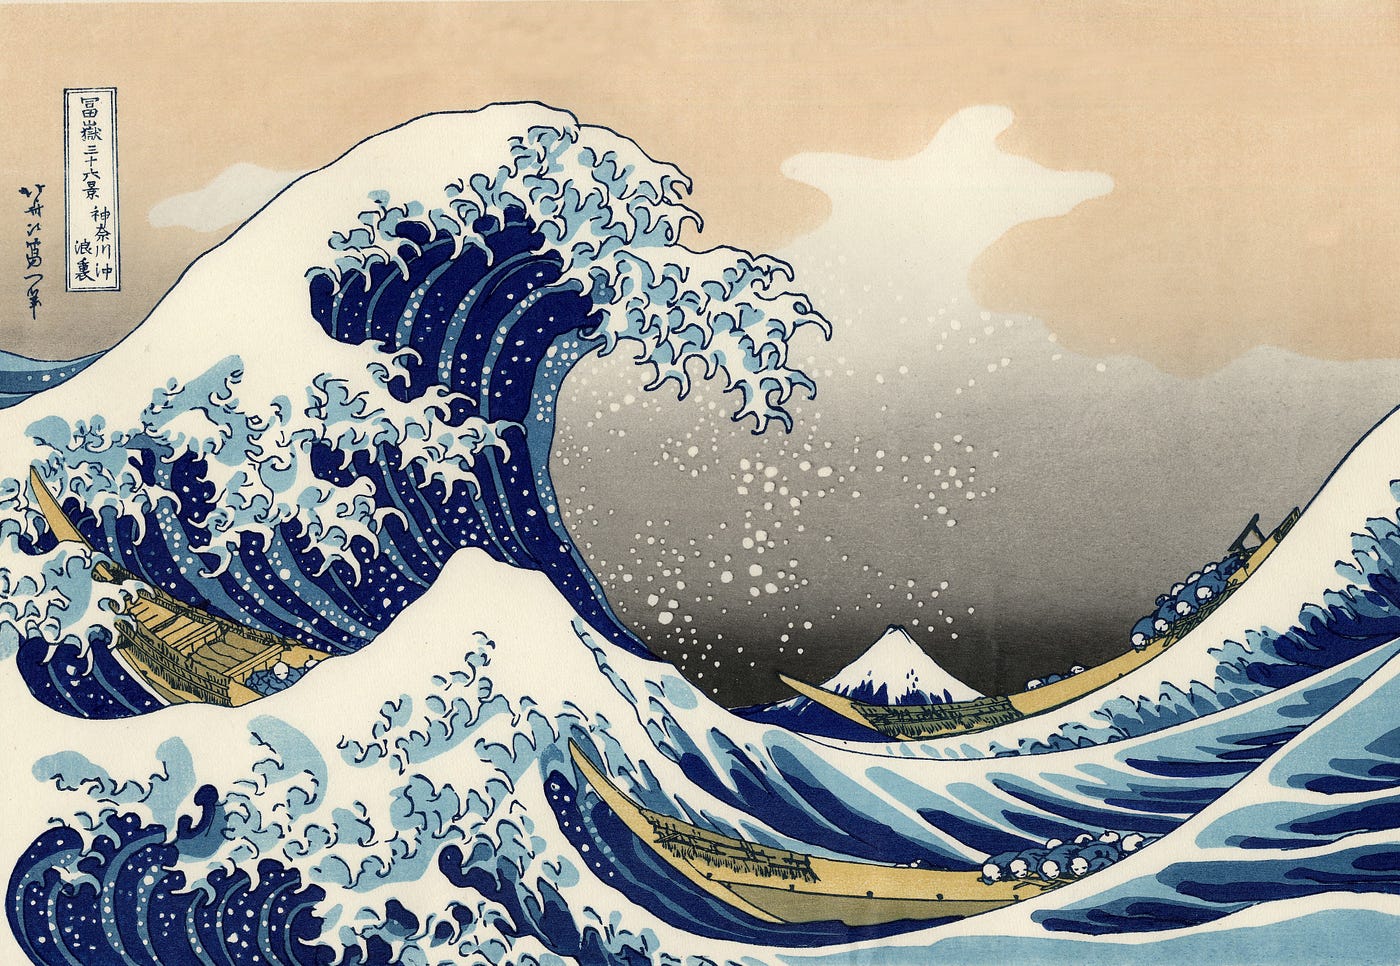 the Great Wave off Kanagawa by Katsushika Hokusai was a masterpiece and at the height of ukiyo-e, an art expression using woodblock printing